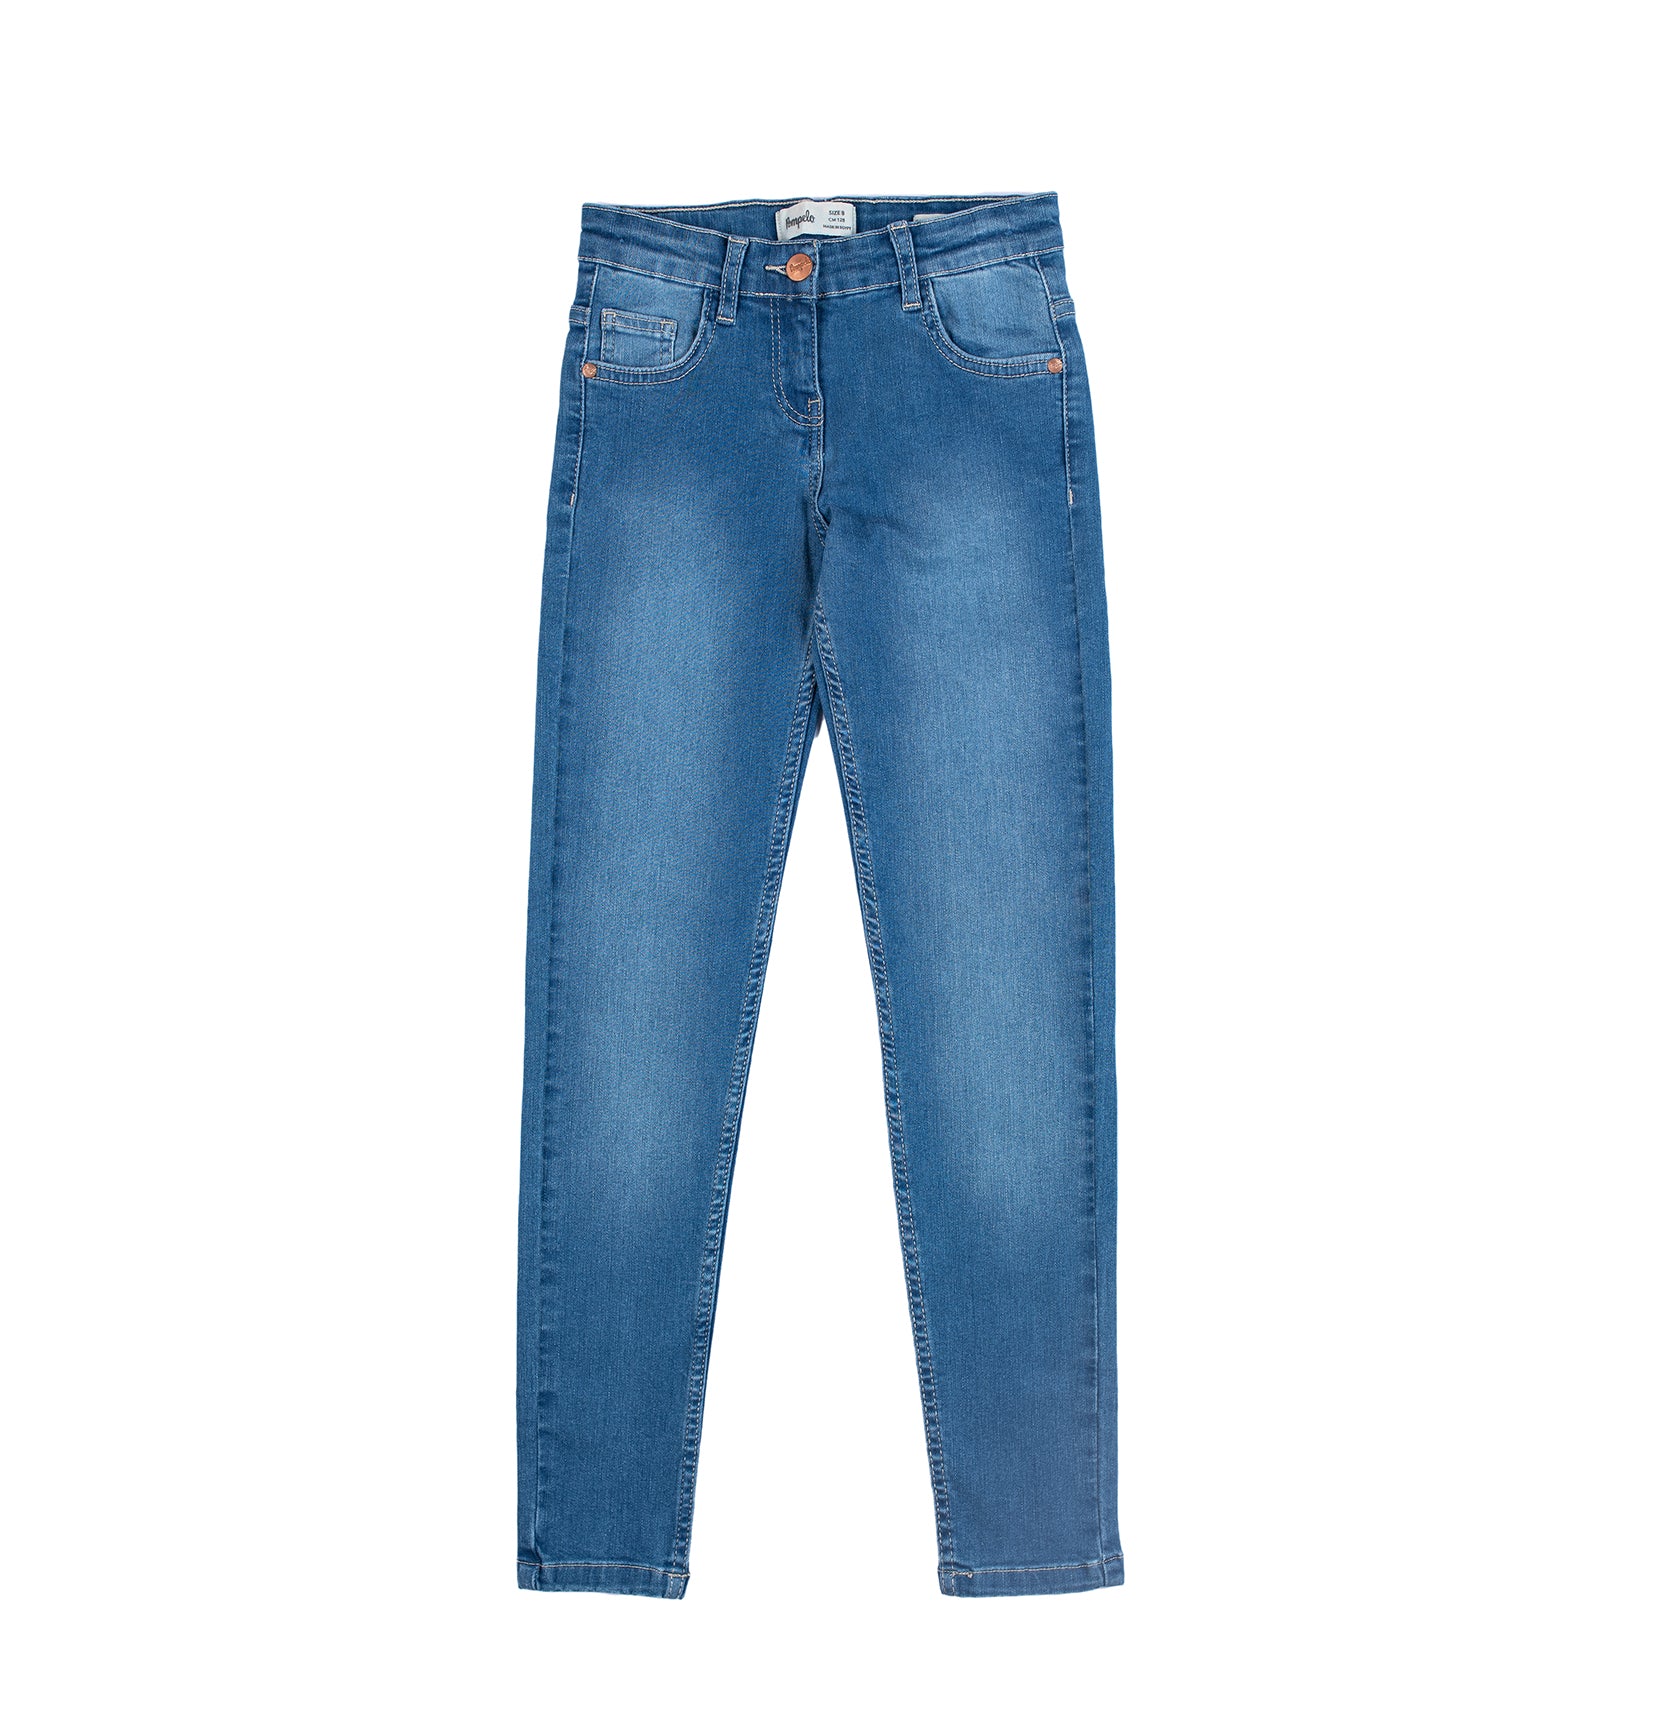 Boy blue skinny jeans by Pompelo